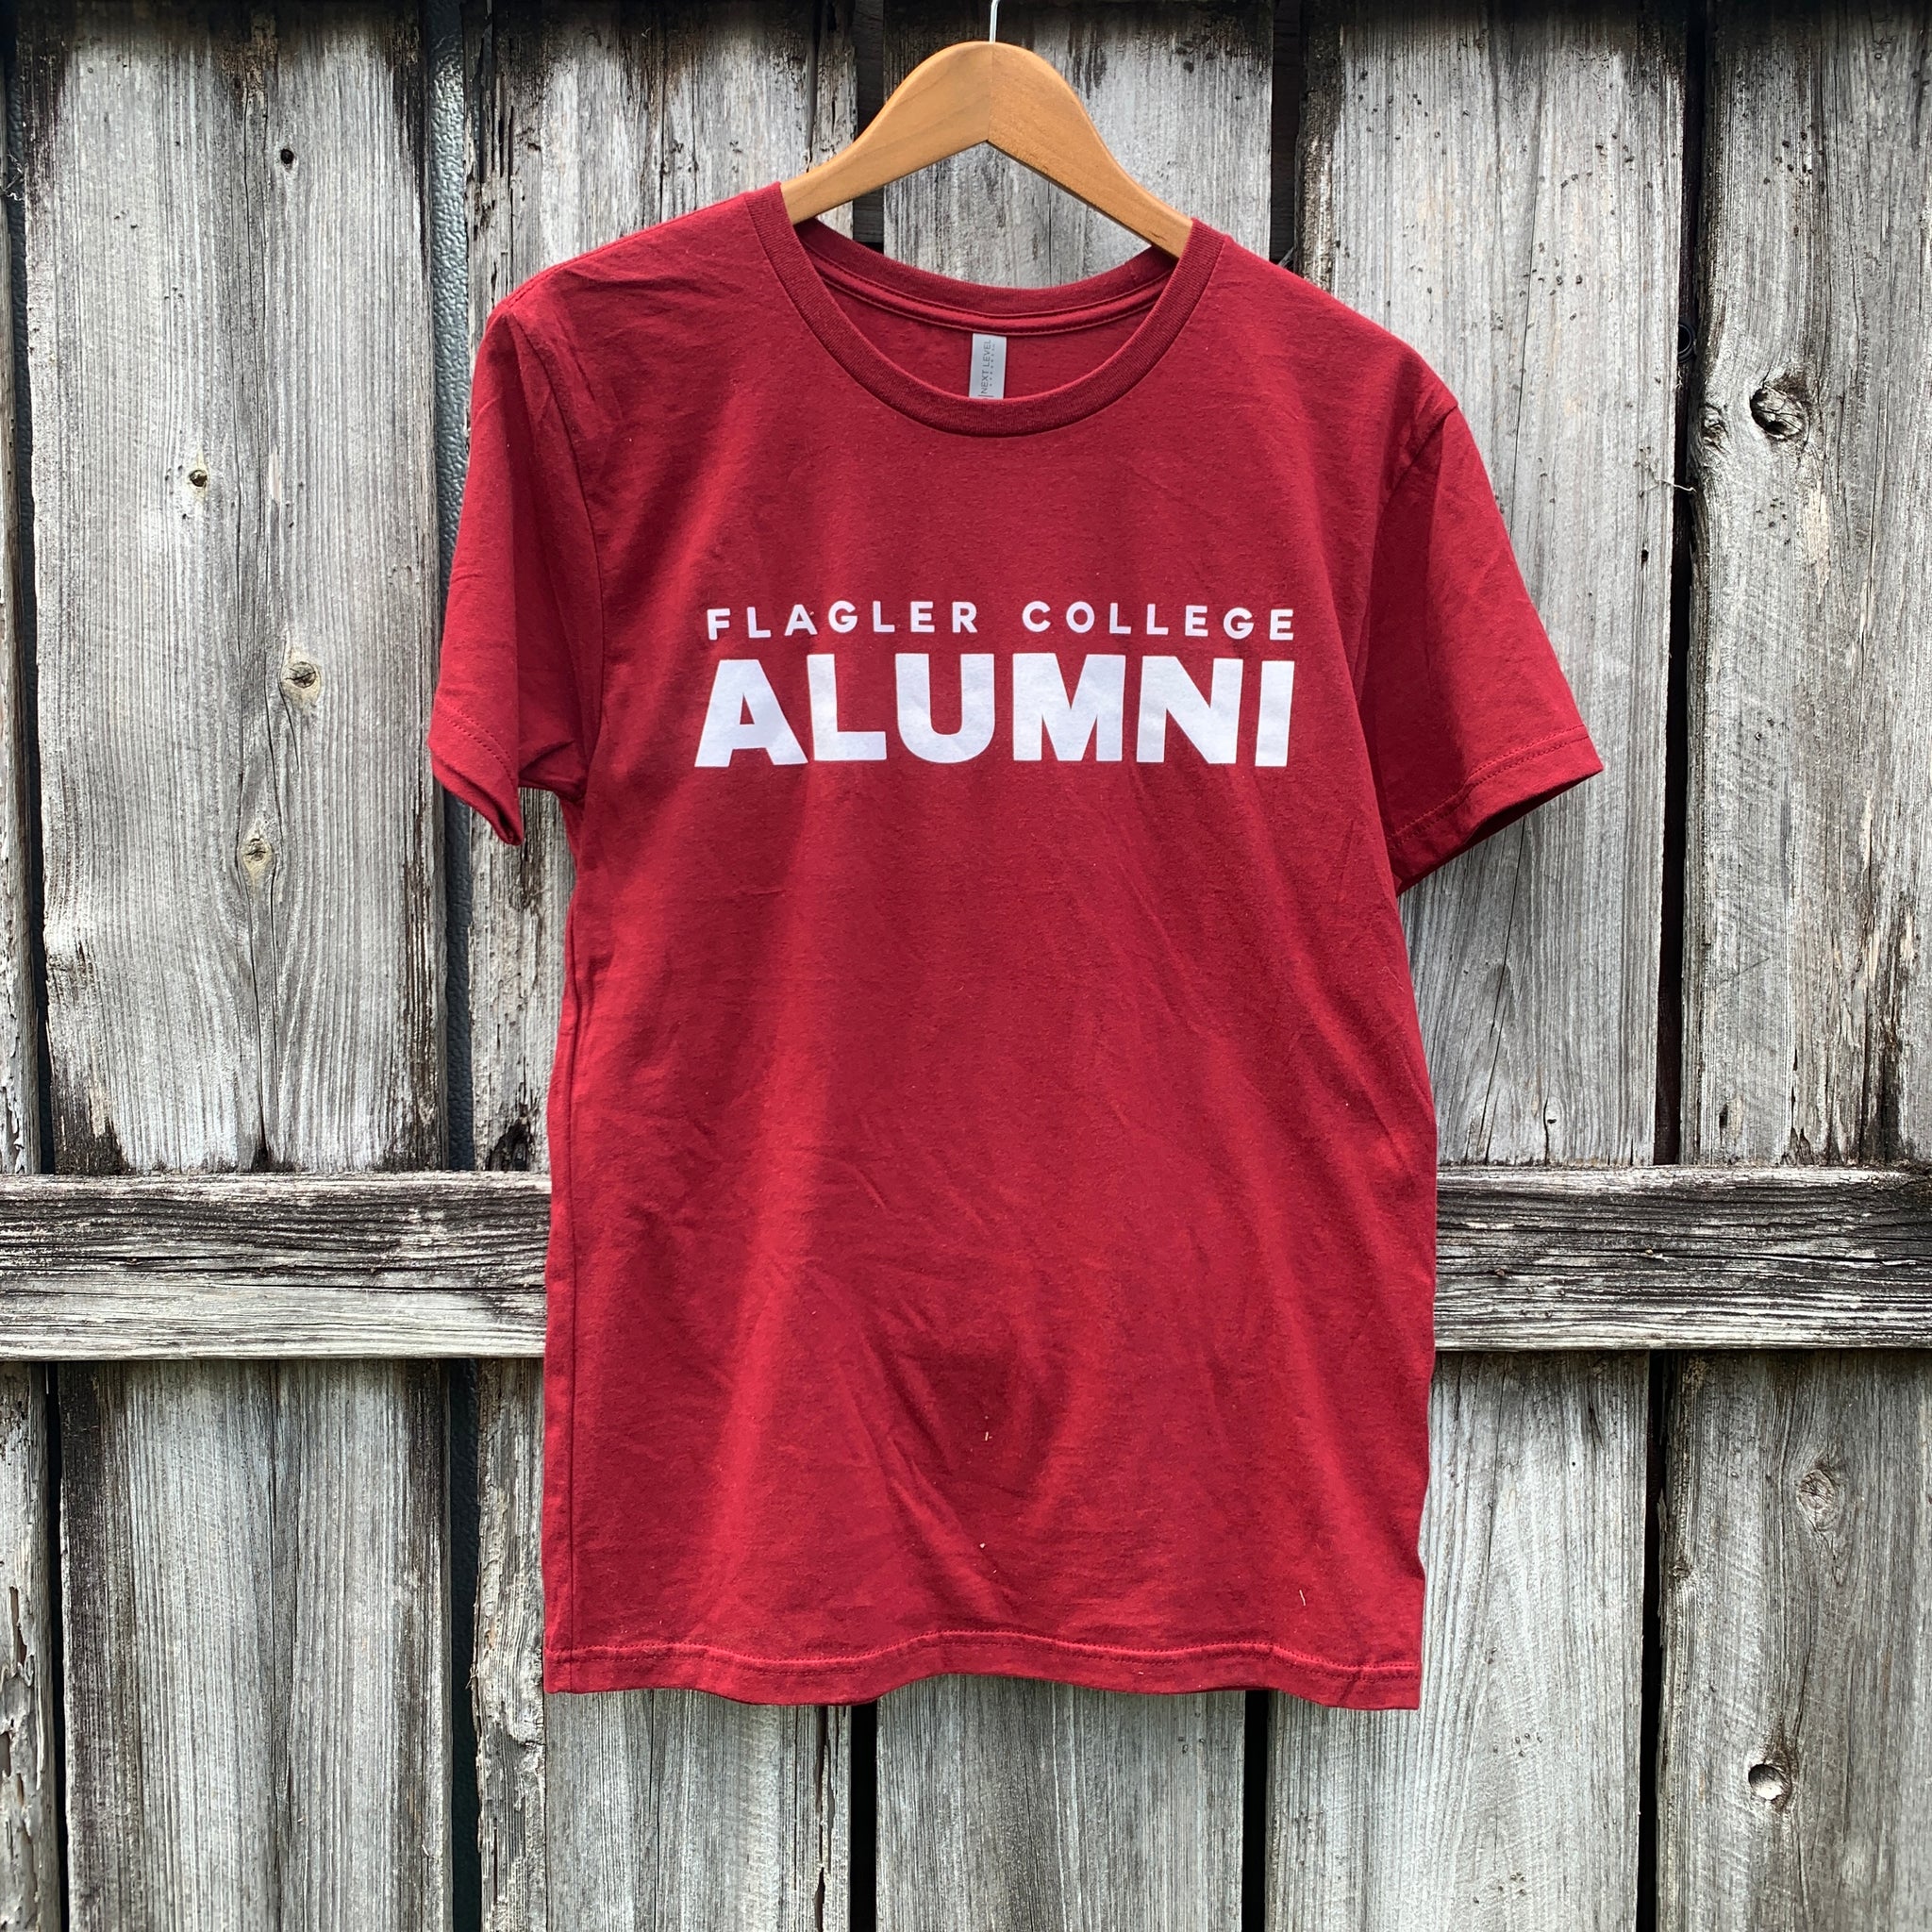 Crimson t-shirt white imprint saying Flagler College Alumni